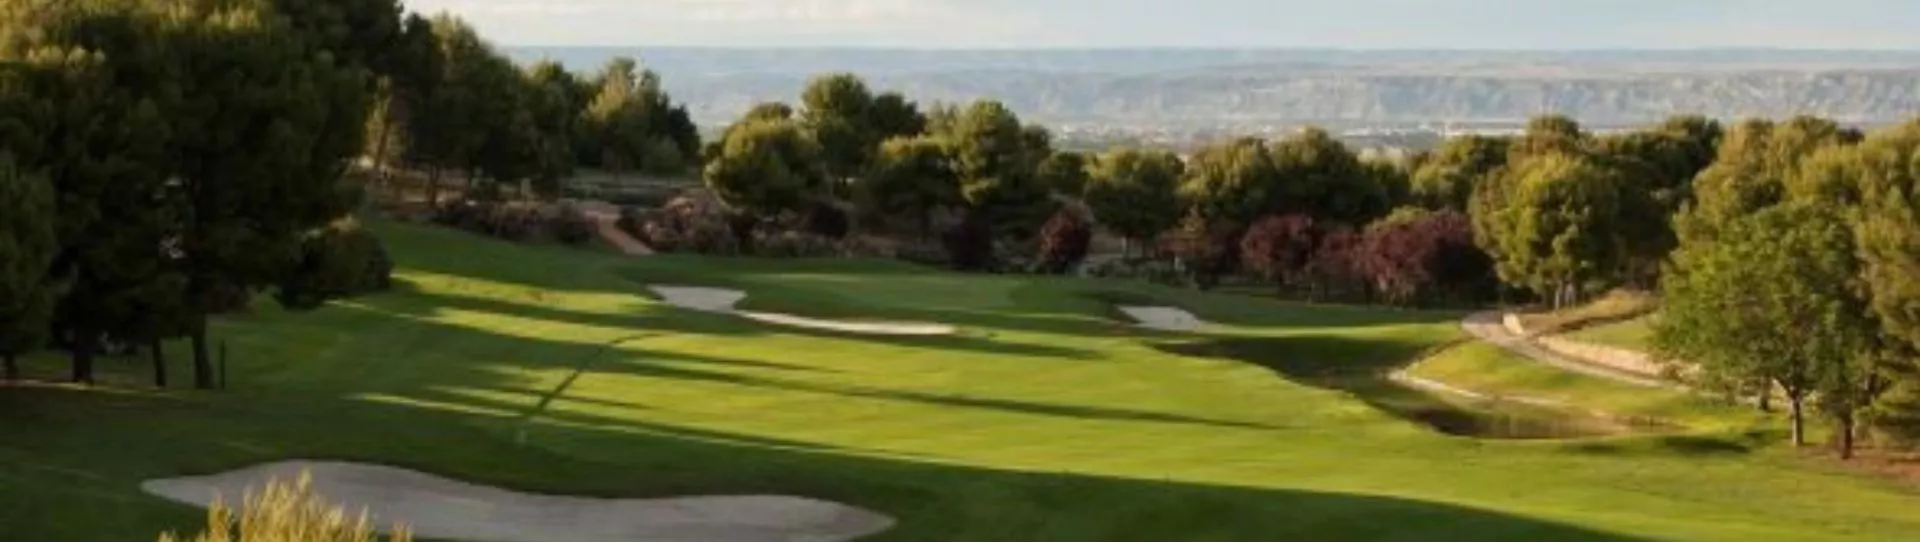 Spain golf courses - Real Aeroclub Zaragoza Golf - Photo 1